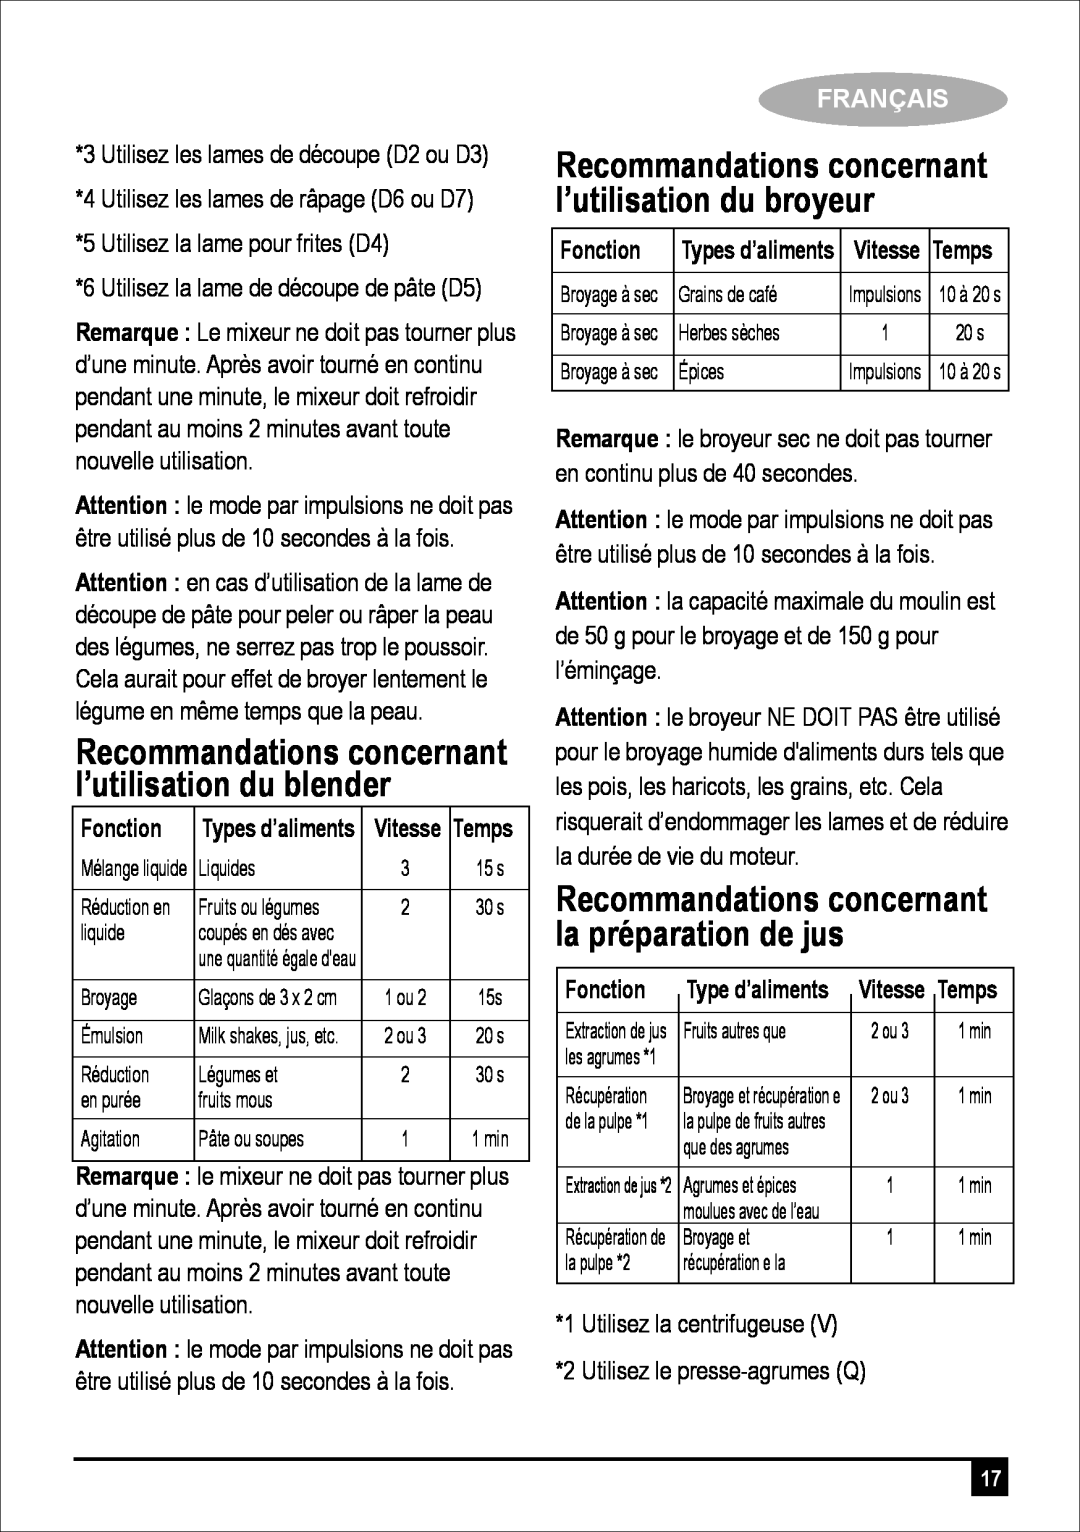 Black & Decker FX710 - B5 manual Recommandations concernant la préparation de jus 